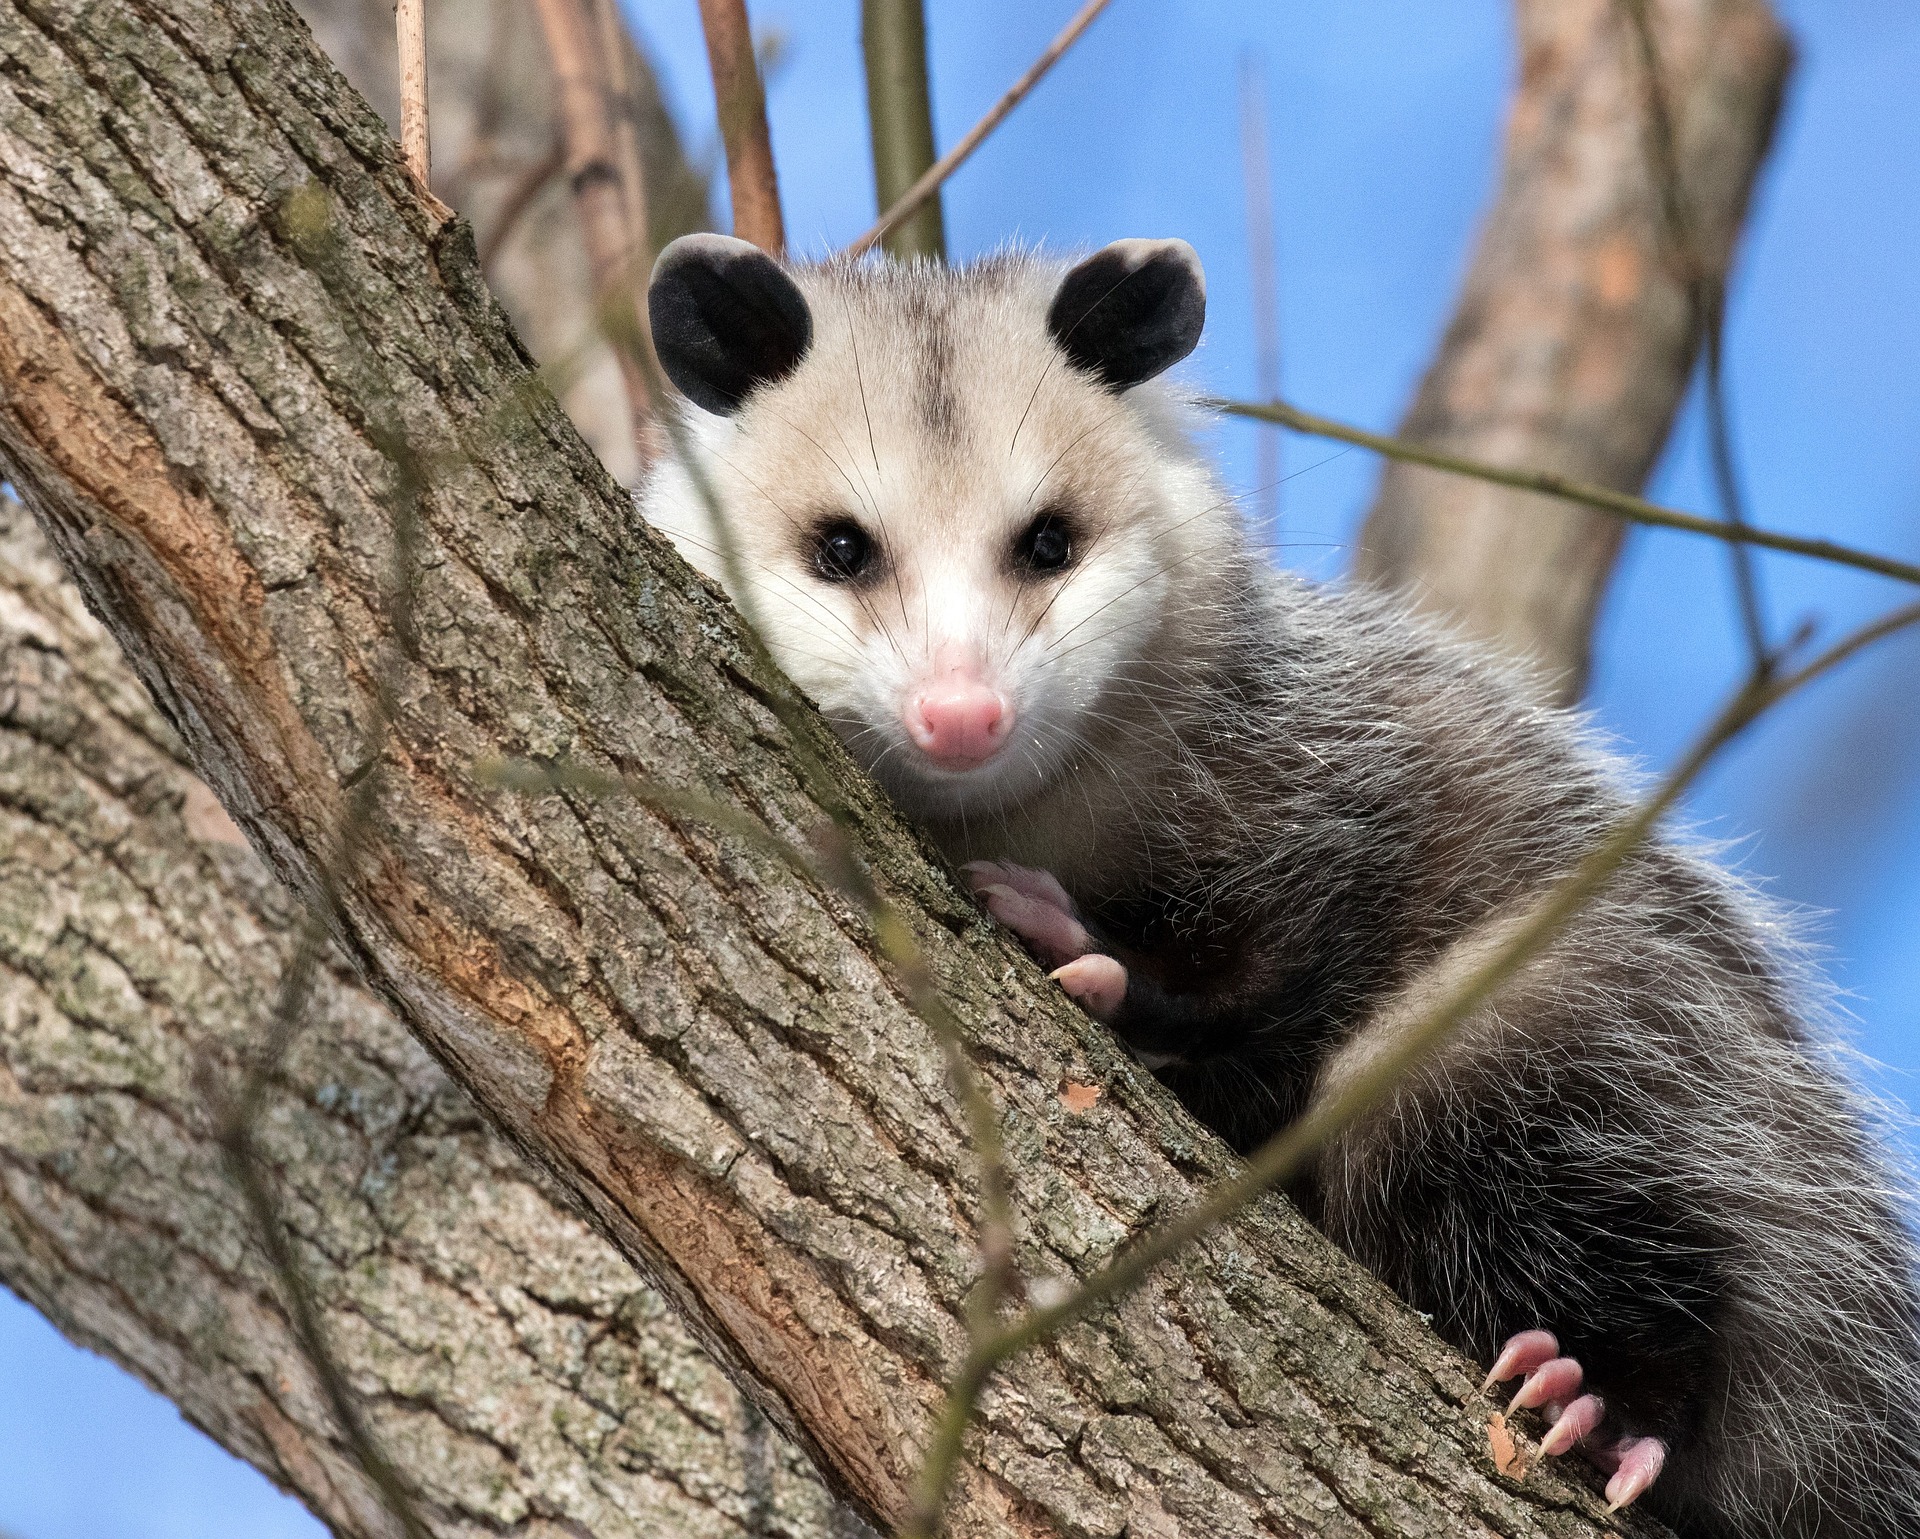 opossum climbing on the tree